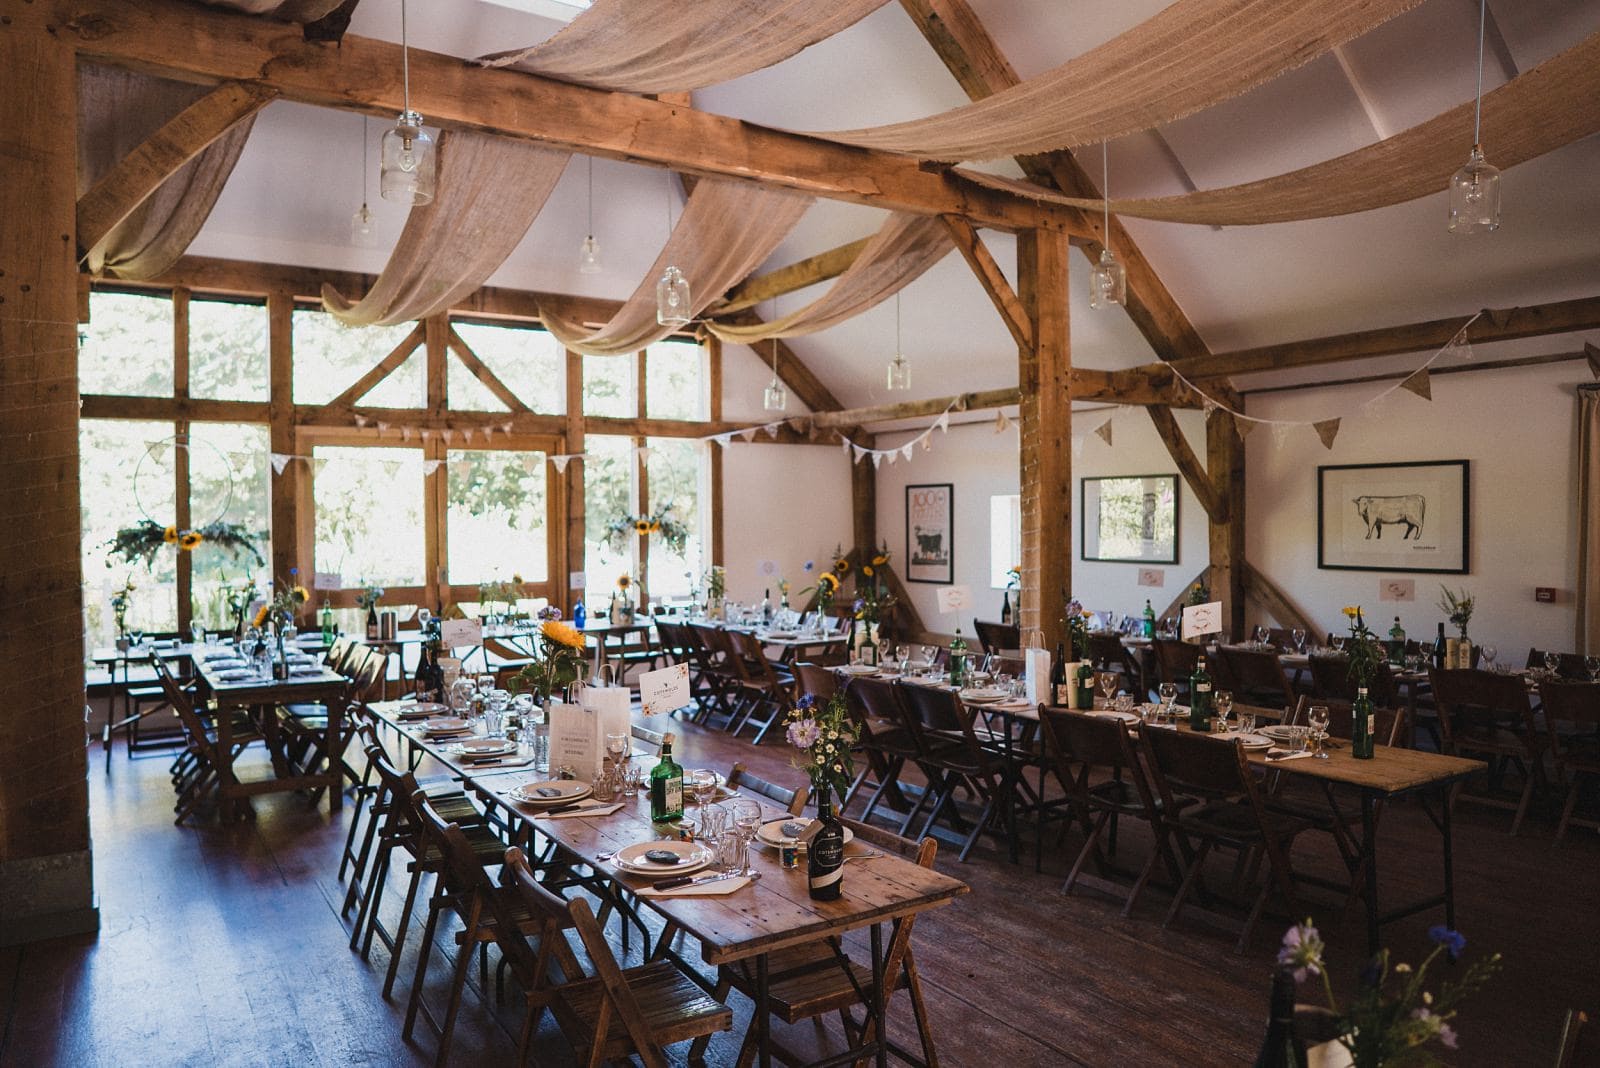 Nancarrow Farm's Oak Barn laid up with trestle tables for a wedding breakfast